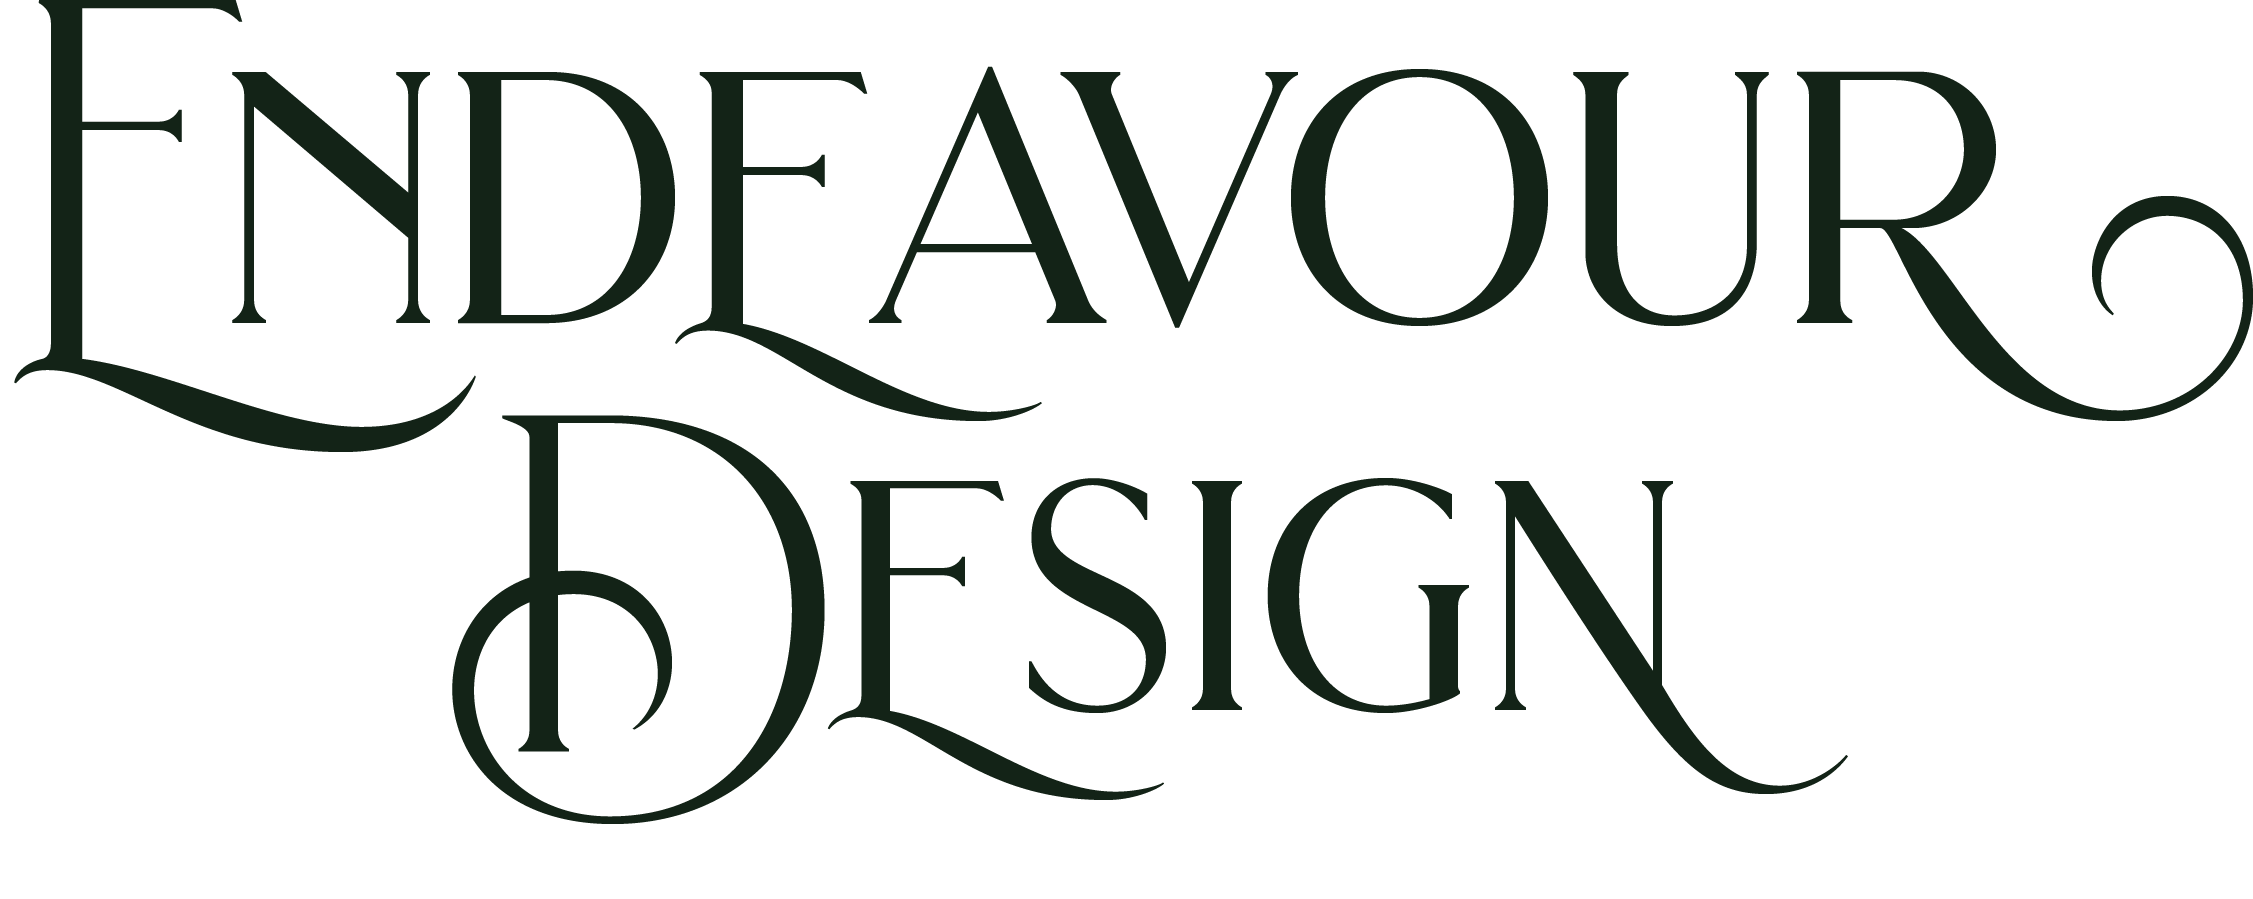 Endeavour Design WordPress web design logo